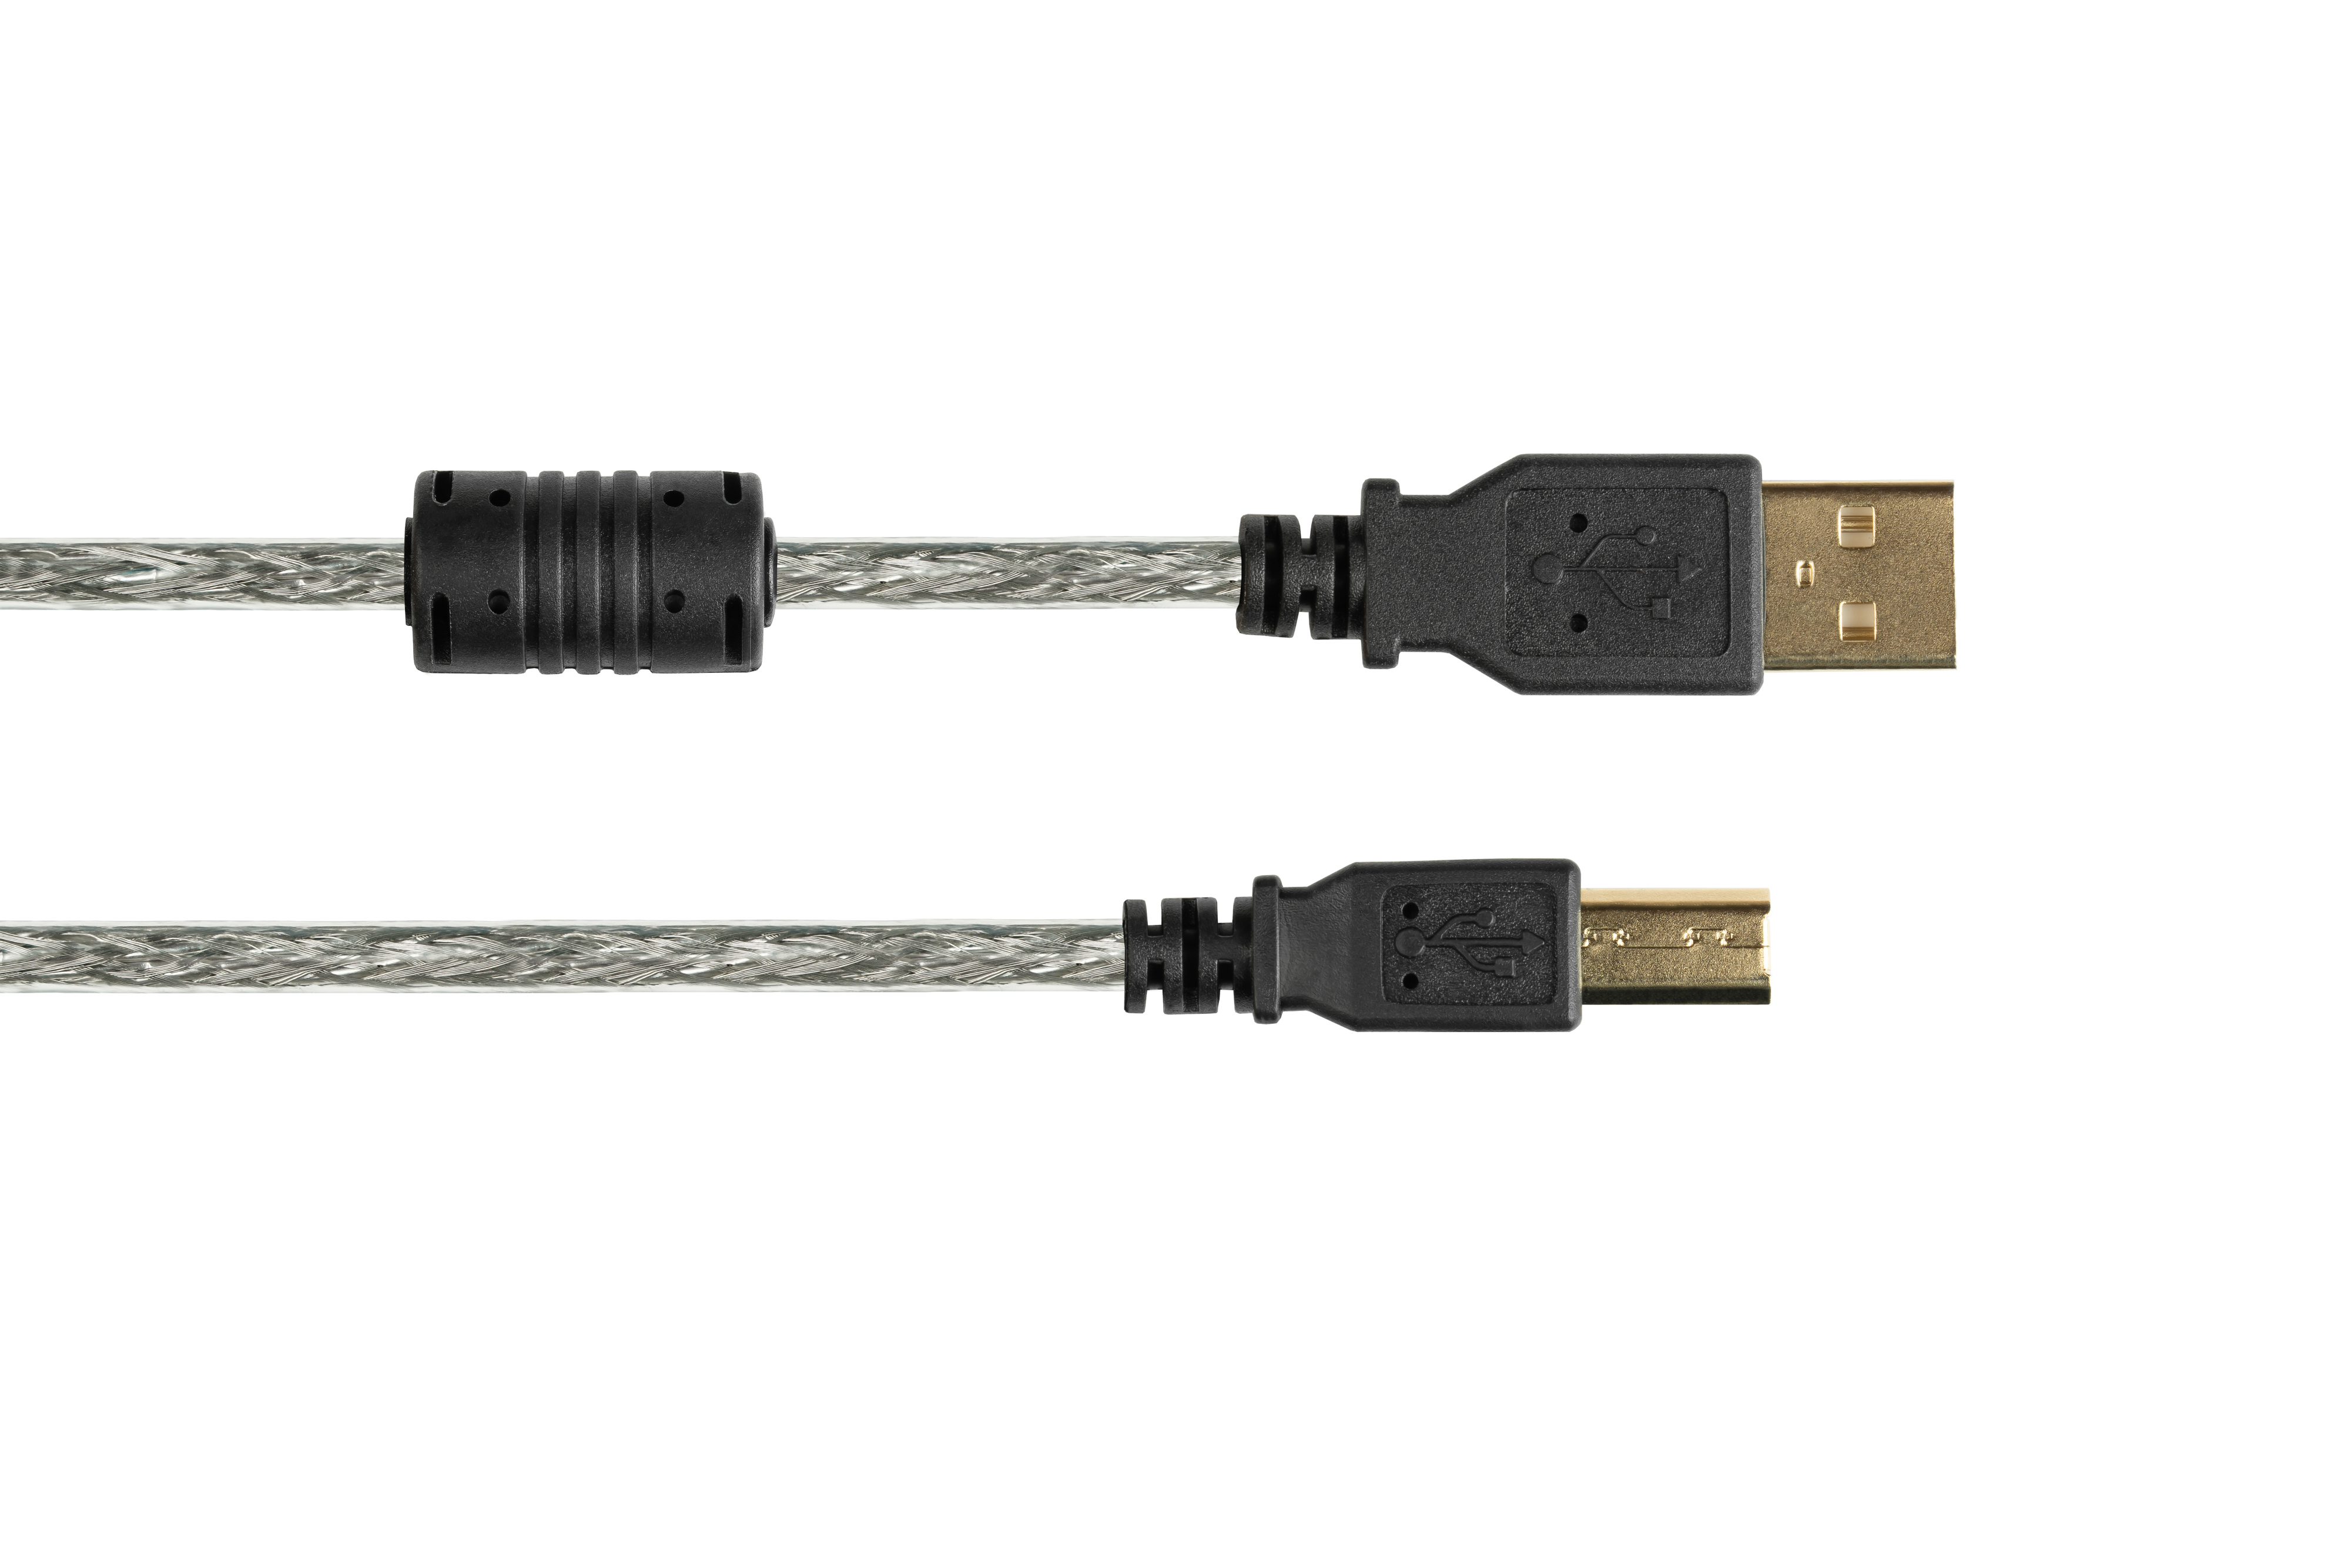 A an USB mit transparent High 2.0 Quality und GOOD B, Goldkontakten, Ferritkern Stecker CONNECTIONS Anschlusskabel Stecker